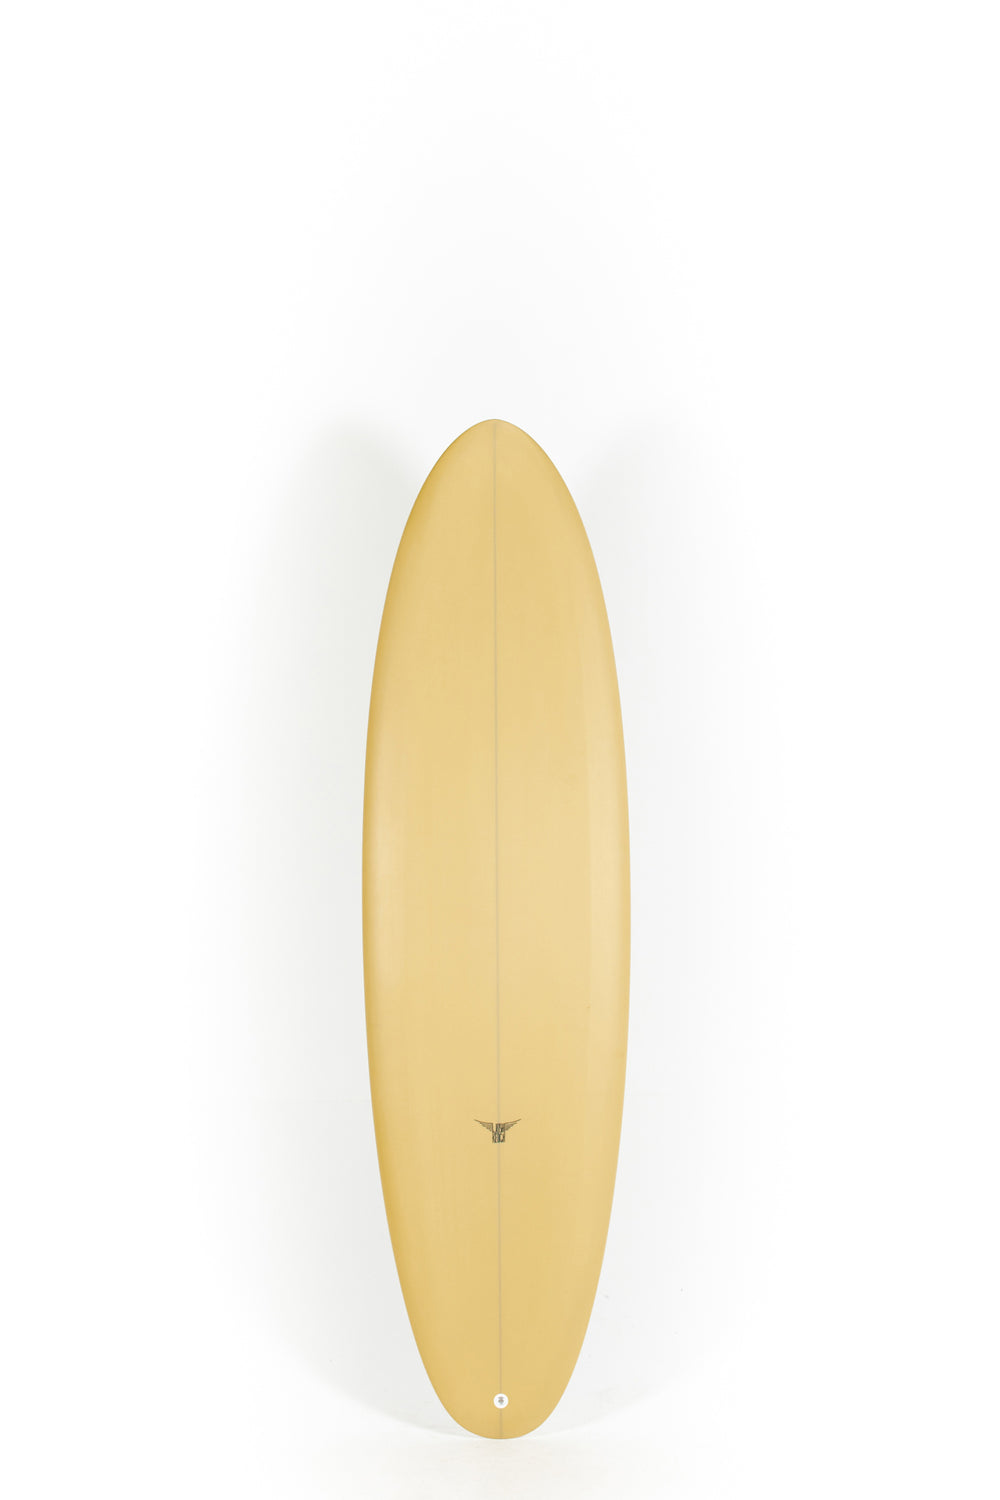 Pukas Surf Shop - Joshua Keogh Surfboard - LIBERATOR TWIN by Joshua Keogh - 6'6